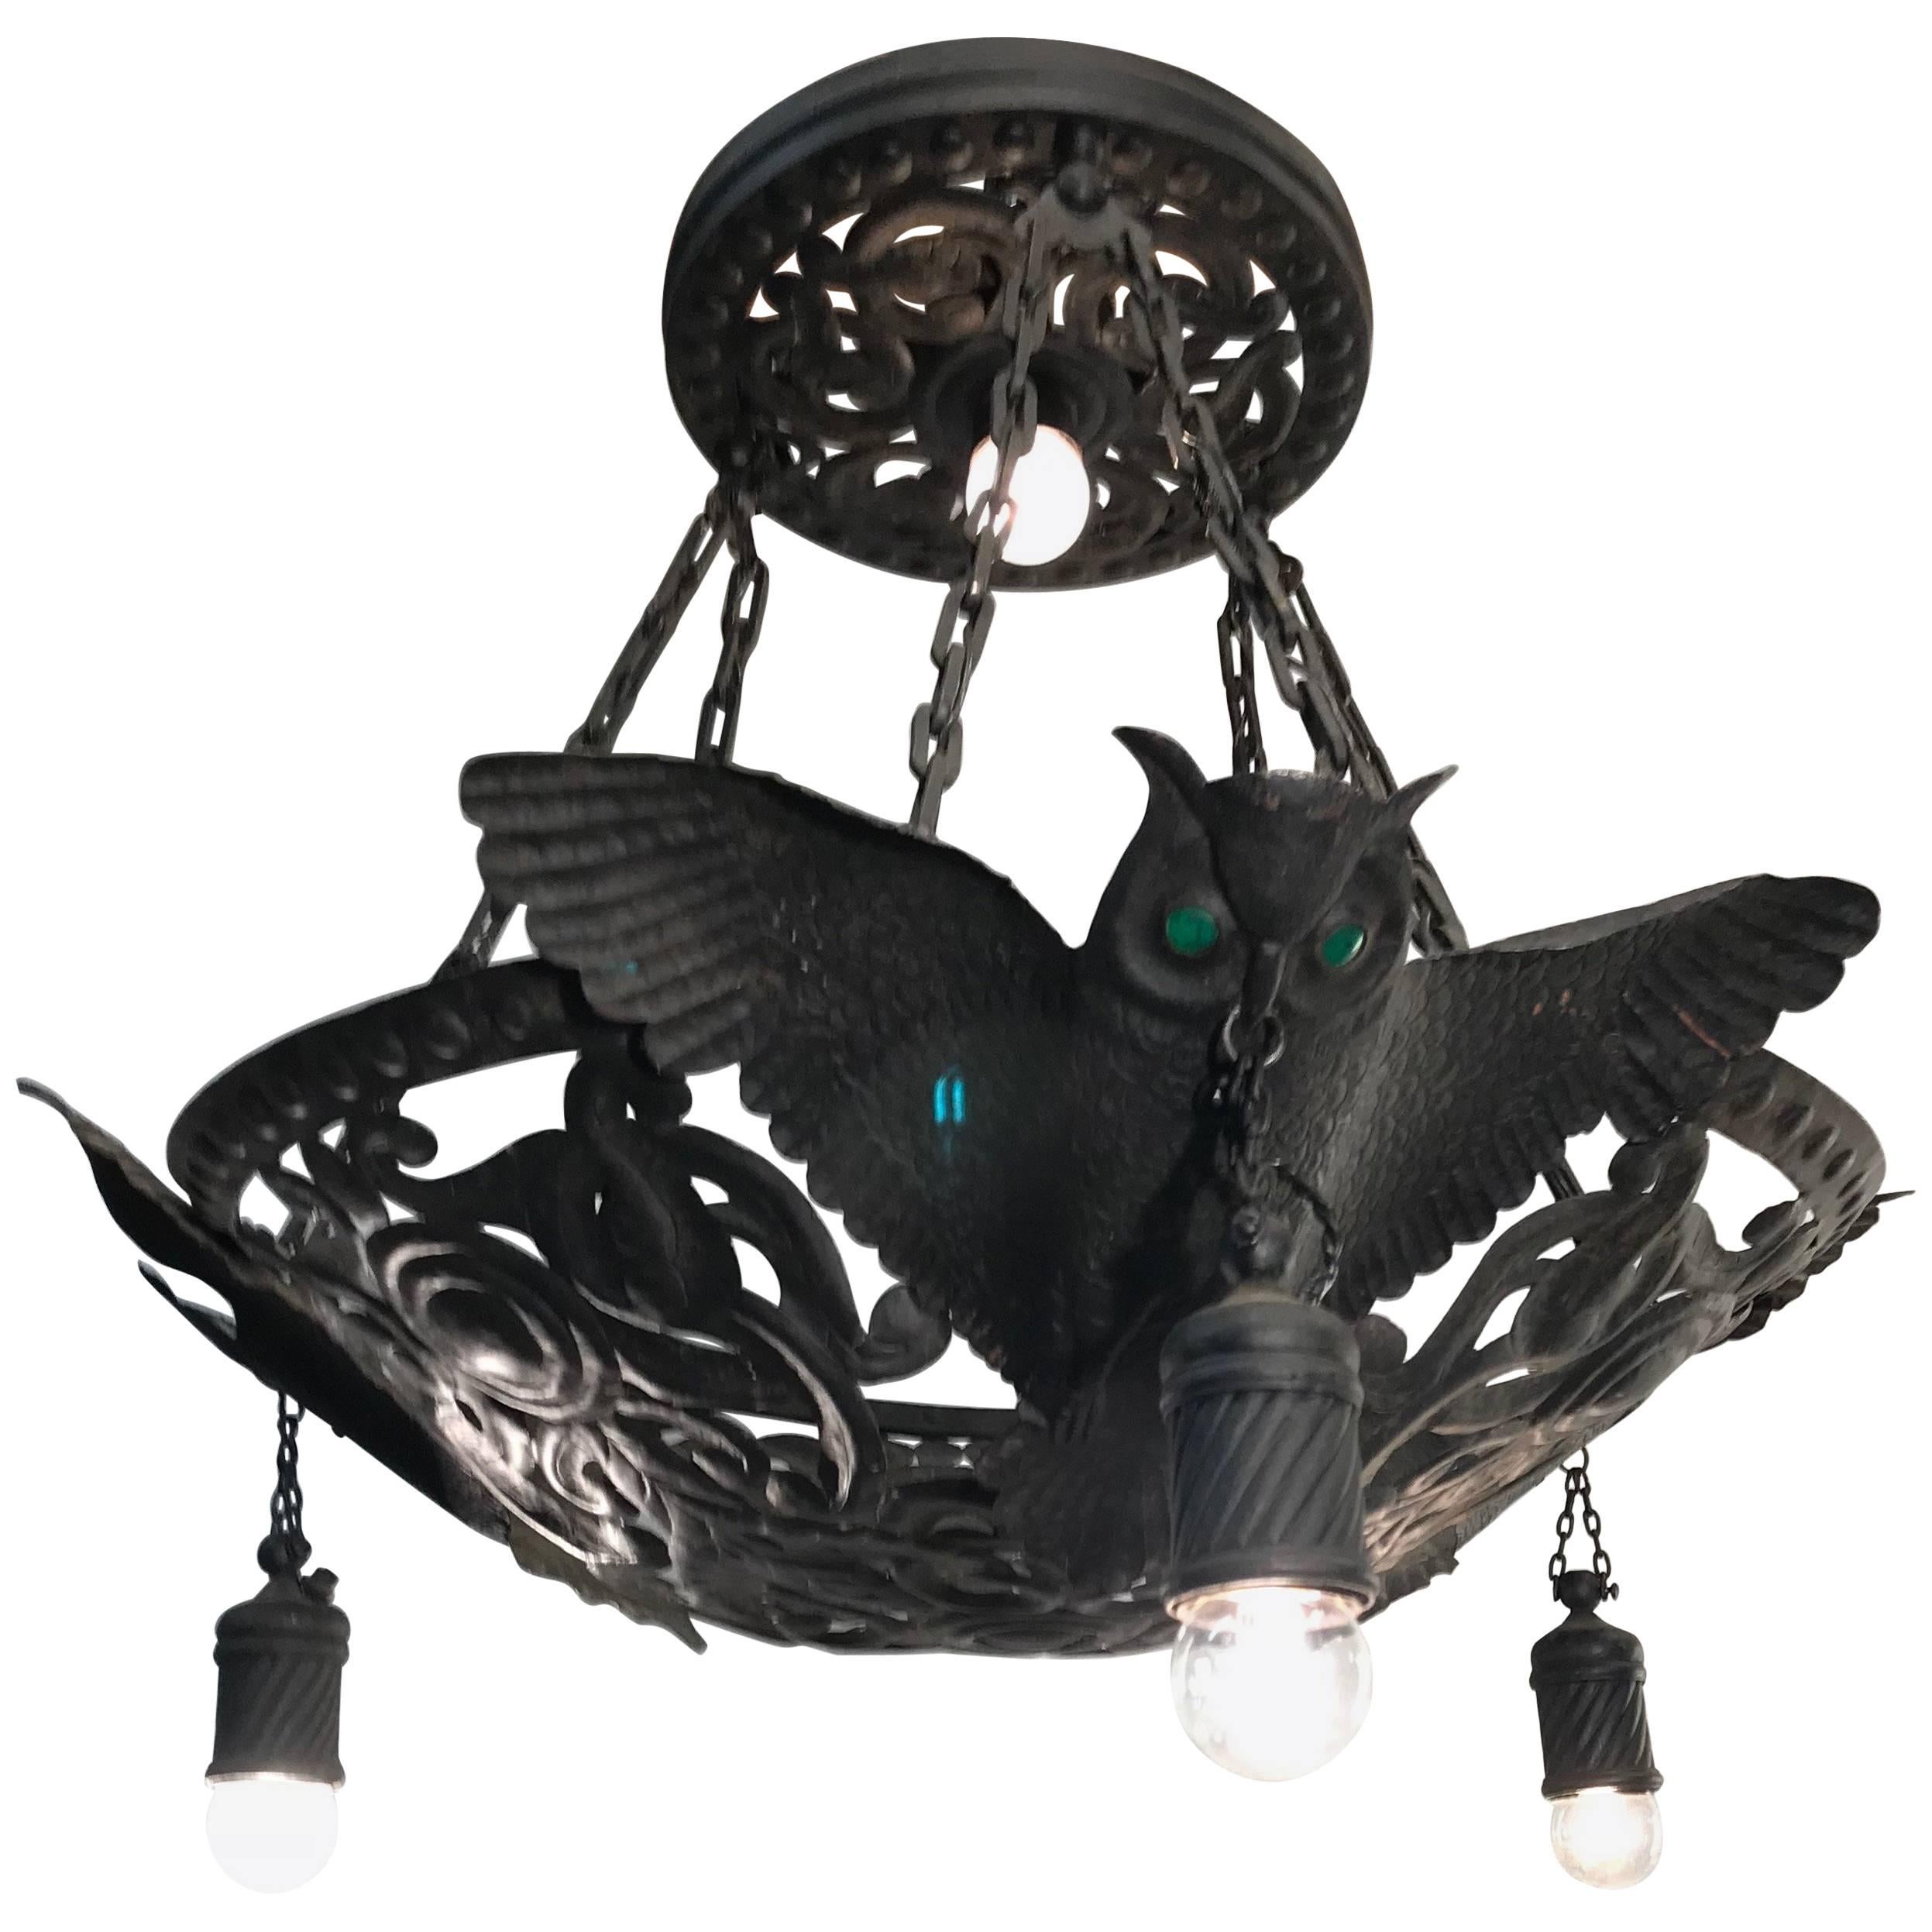 Unique Arts & Crafts Flying Owl Sculptures Pendant / Metal Art Light Fixture